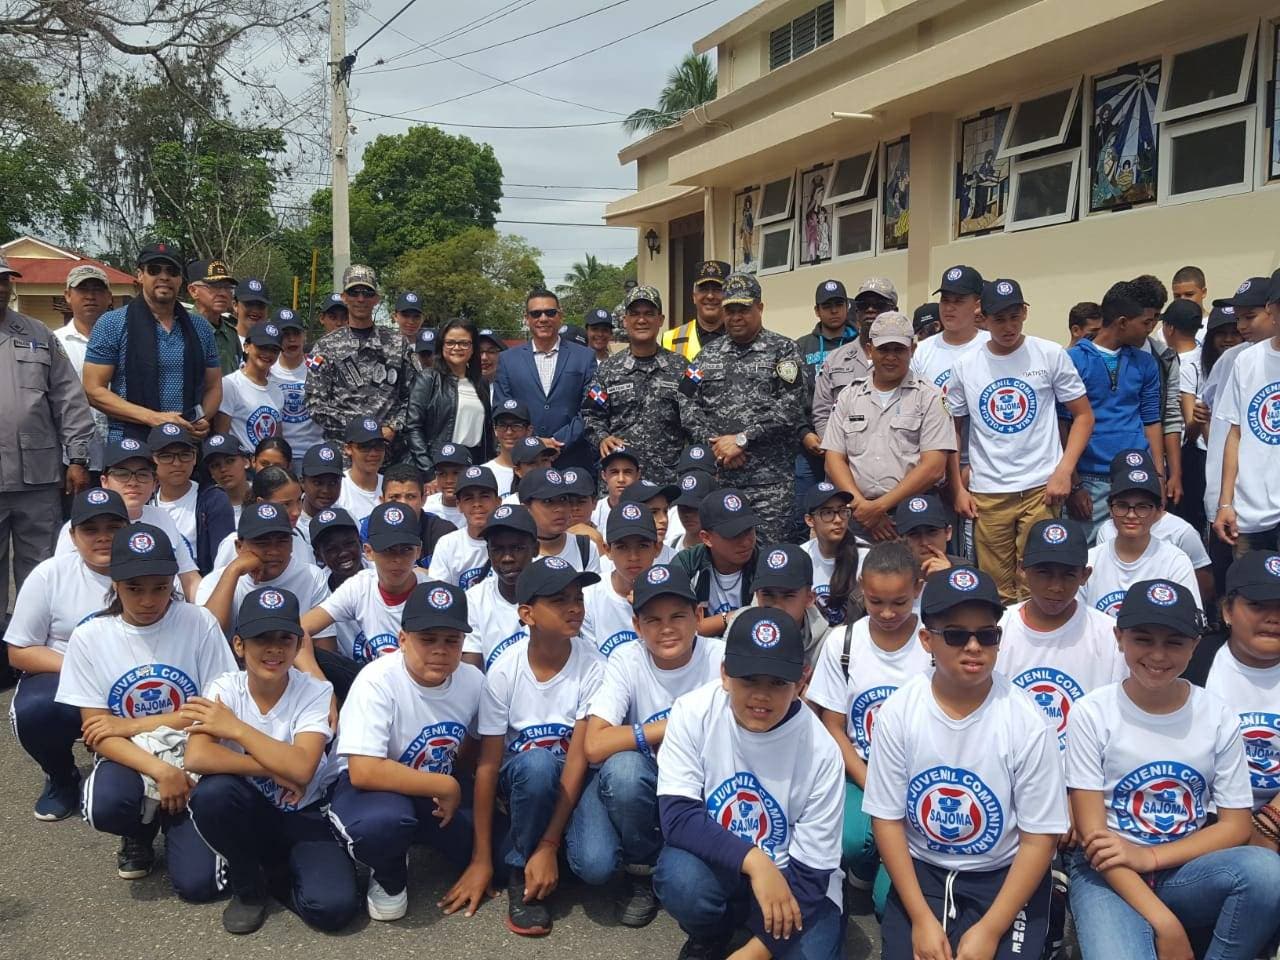 Alcalde San José de las Matas elogia Policía Juvenil Comunitaria